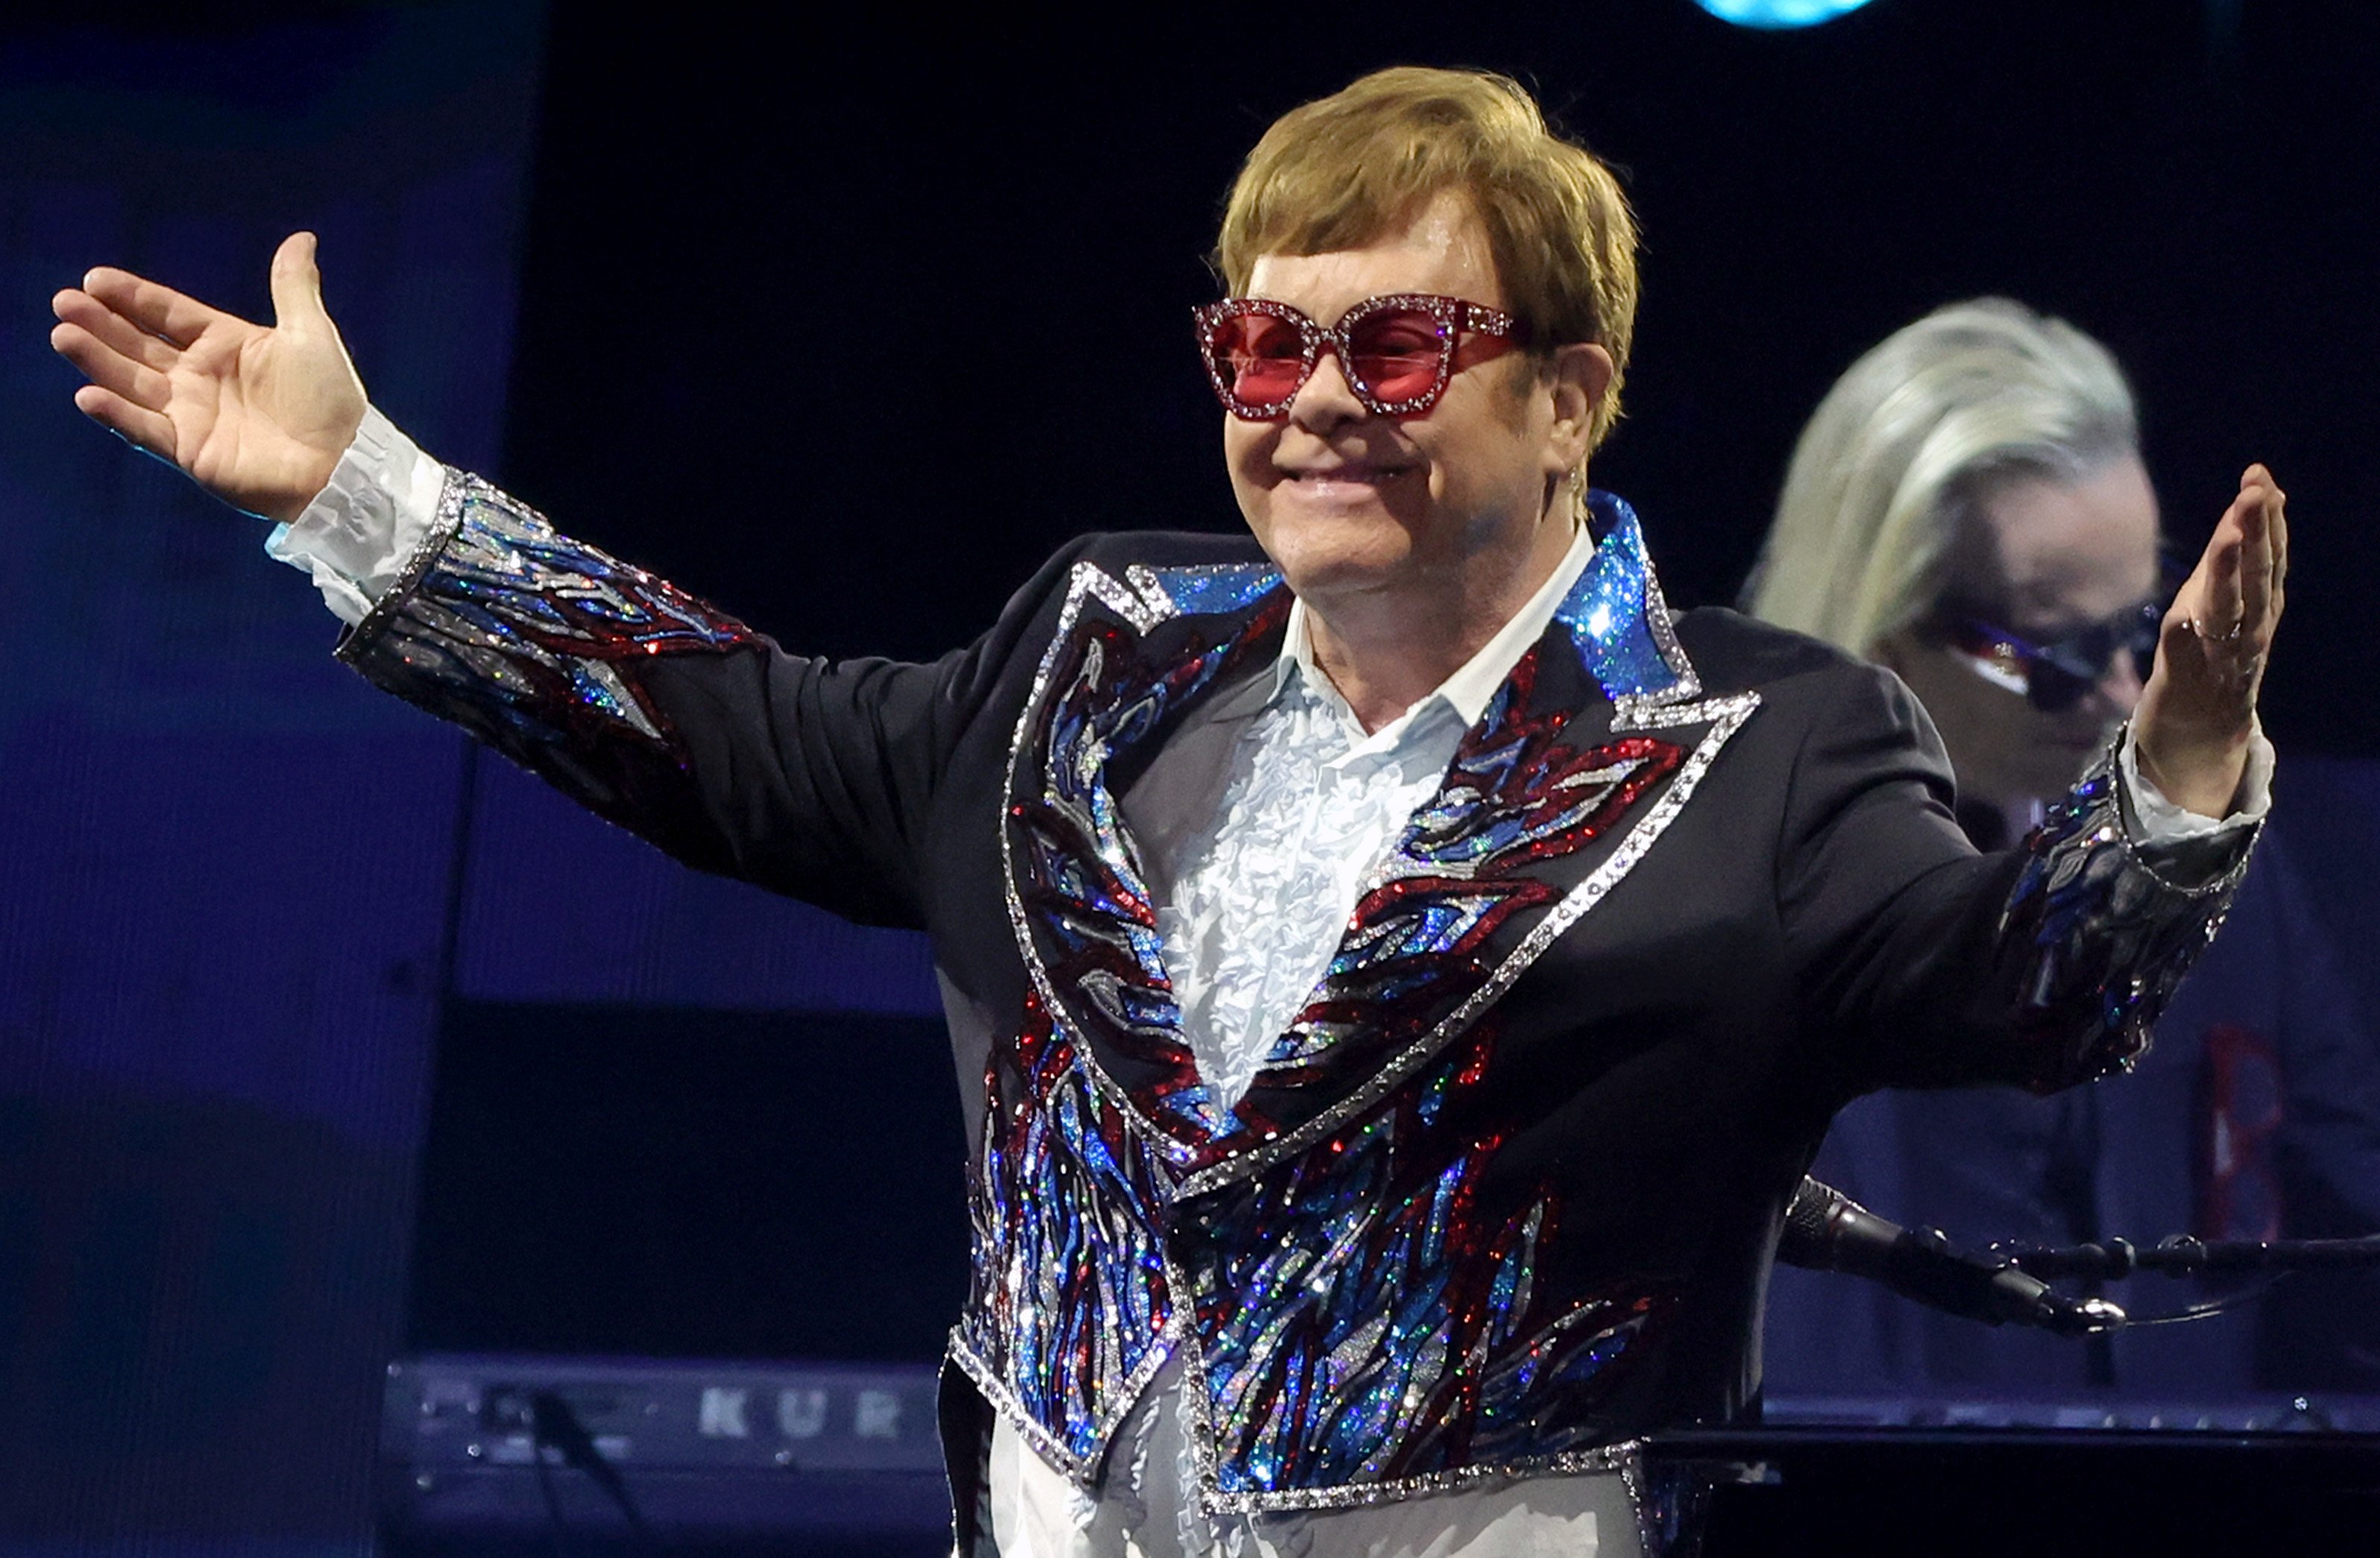 Has Elton John Played His Last North American Concert?